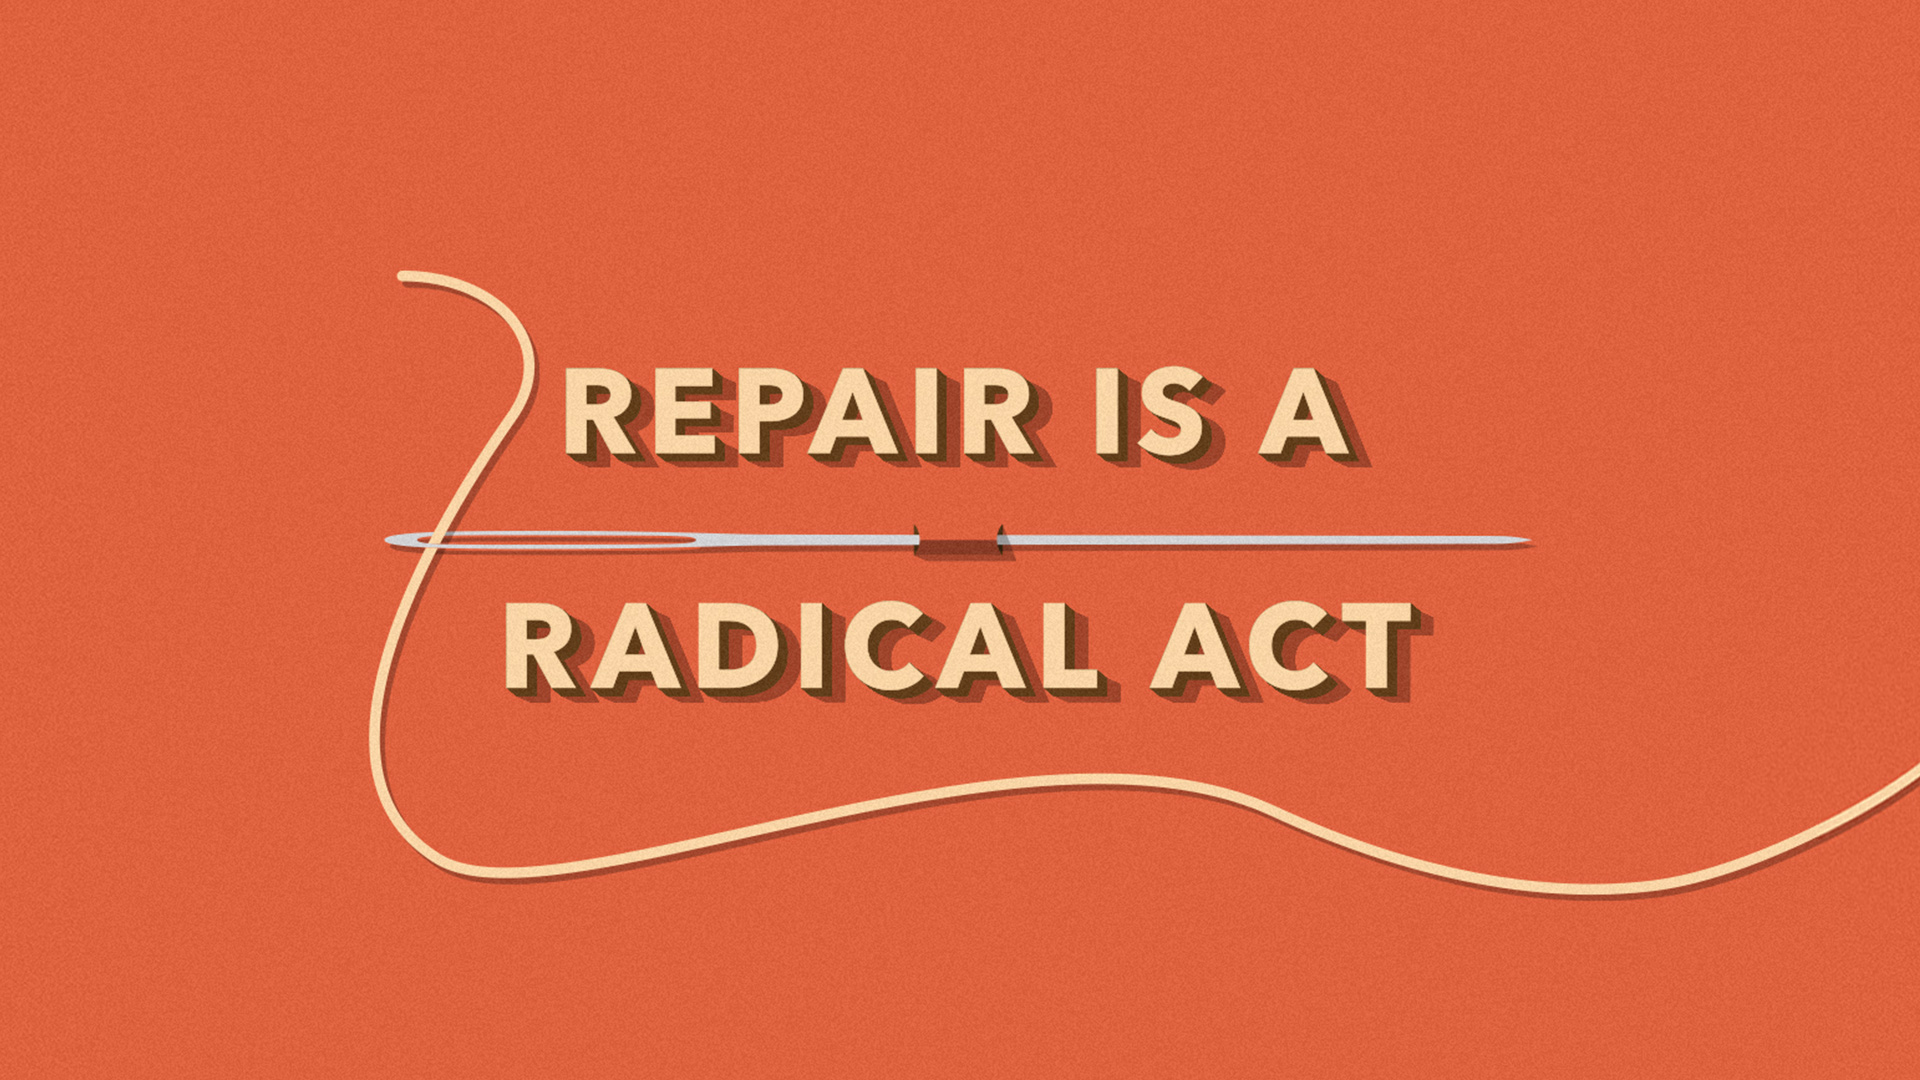 Repair is a radical act